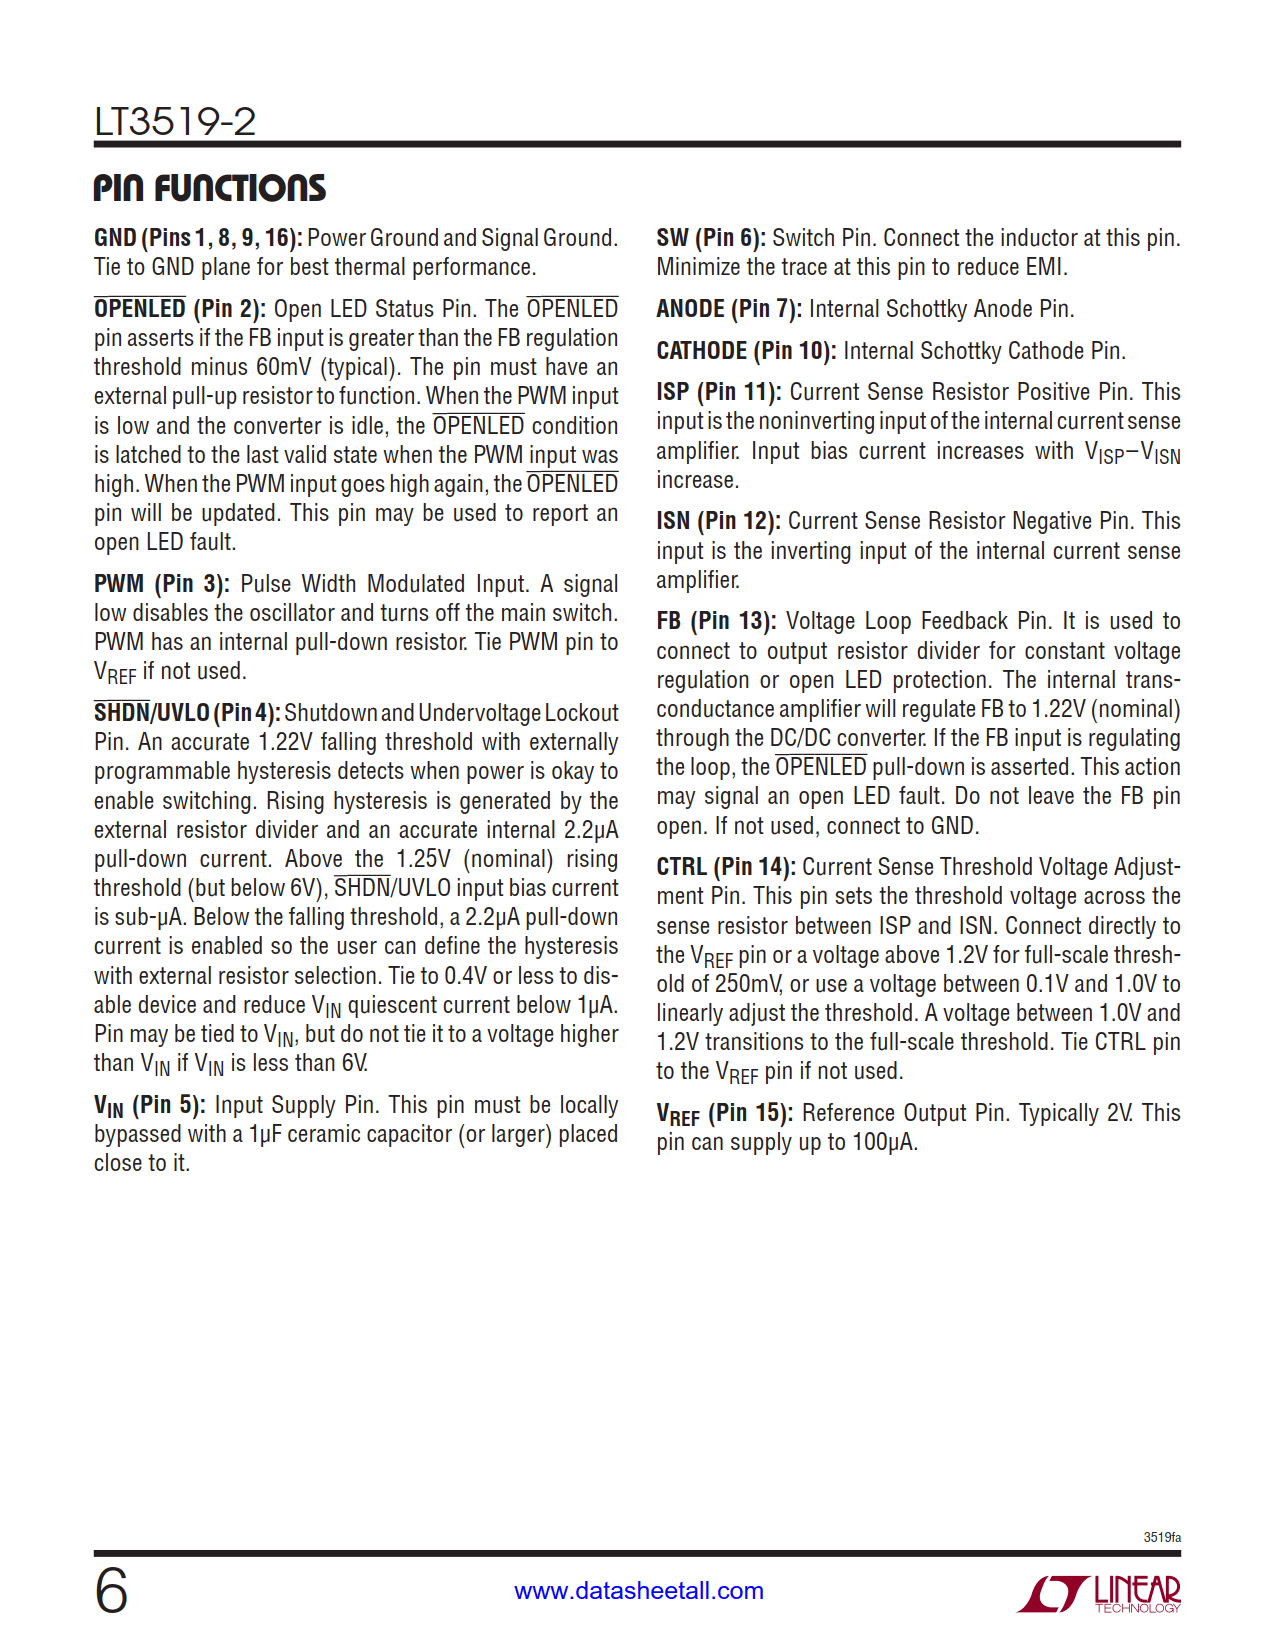 LT3519-2 Datasheet Page 6